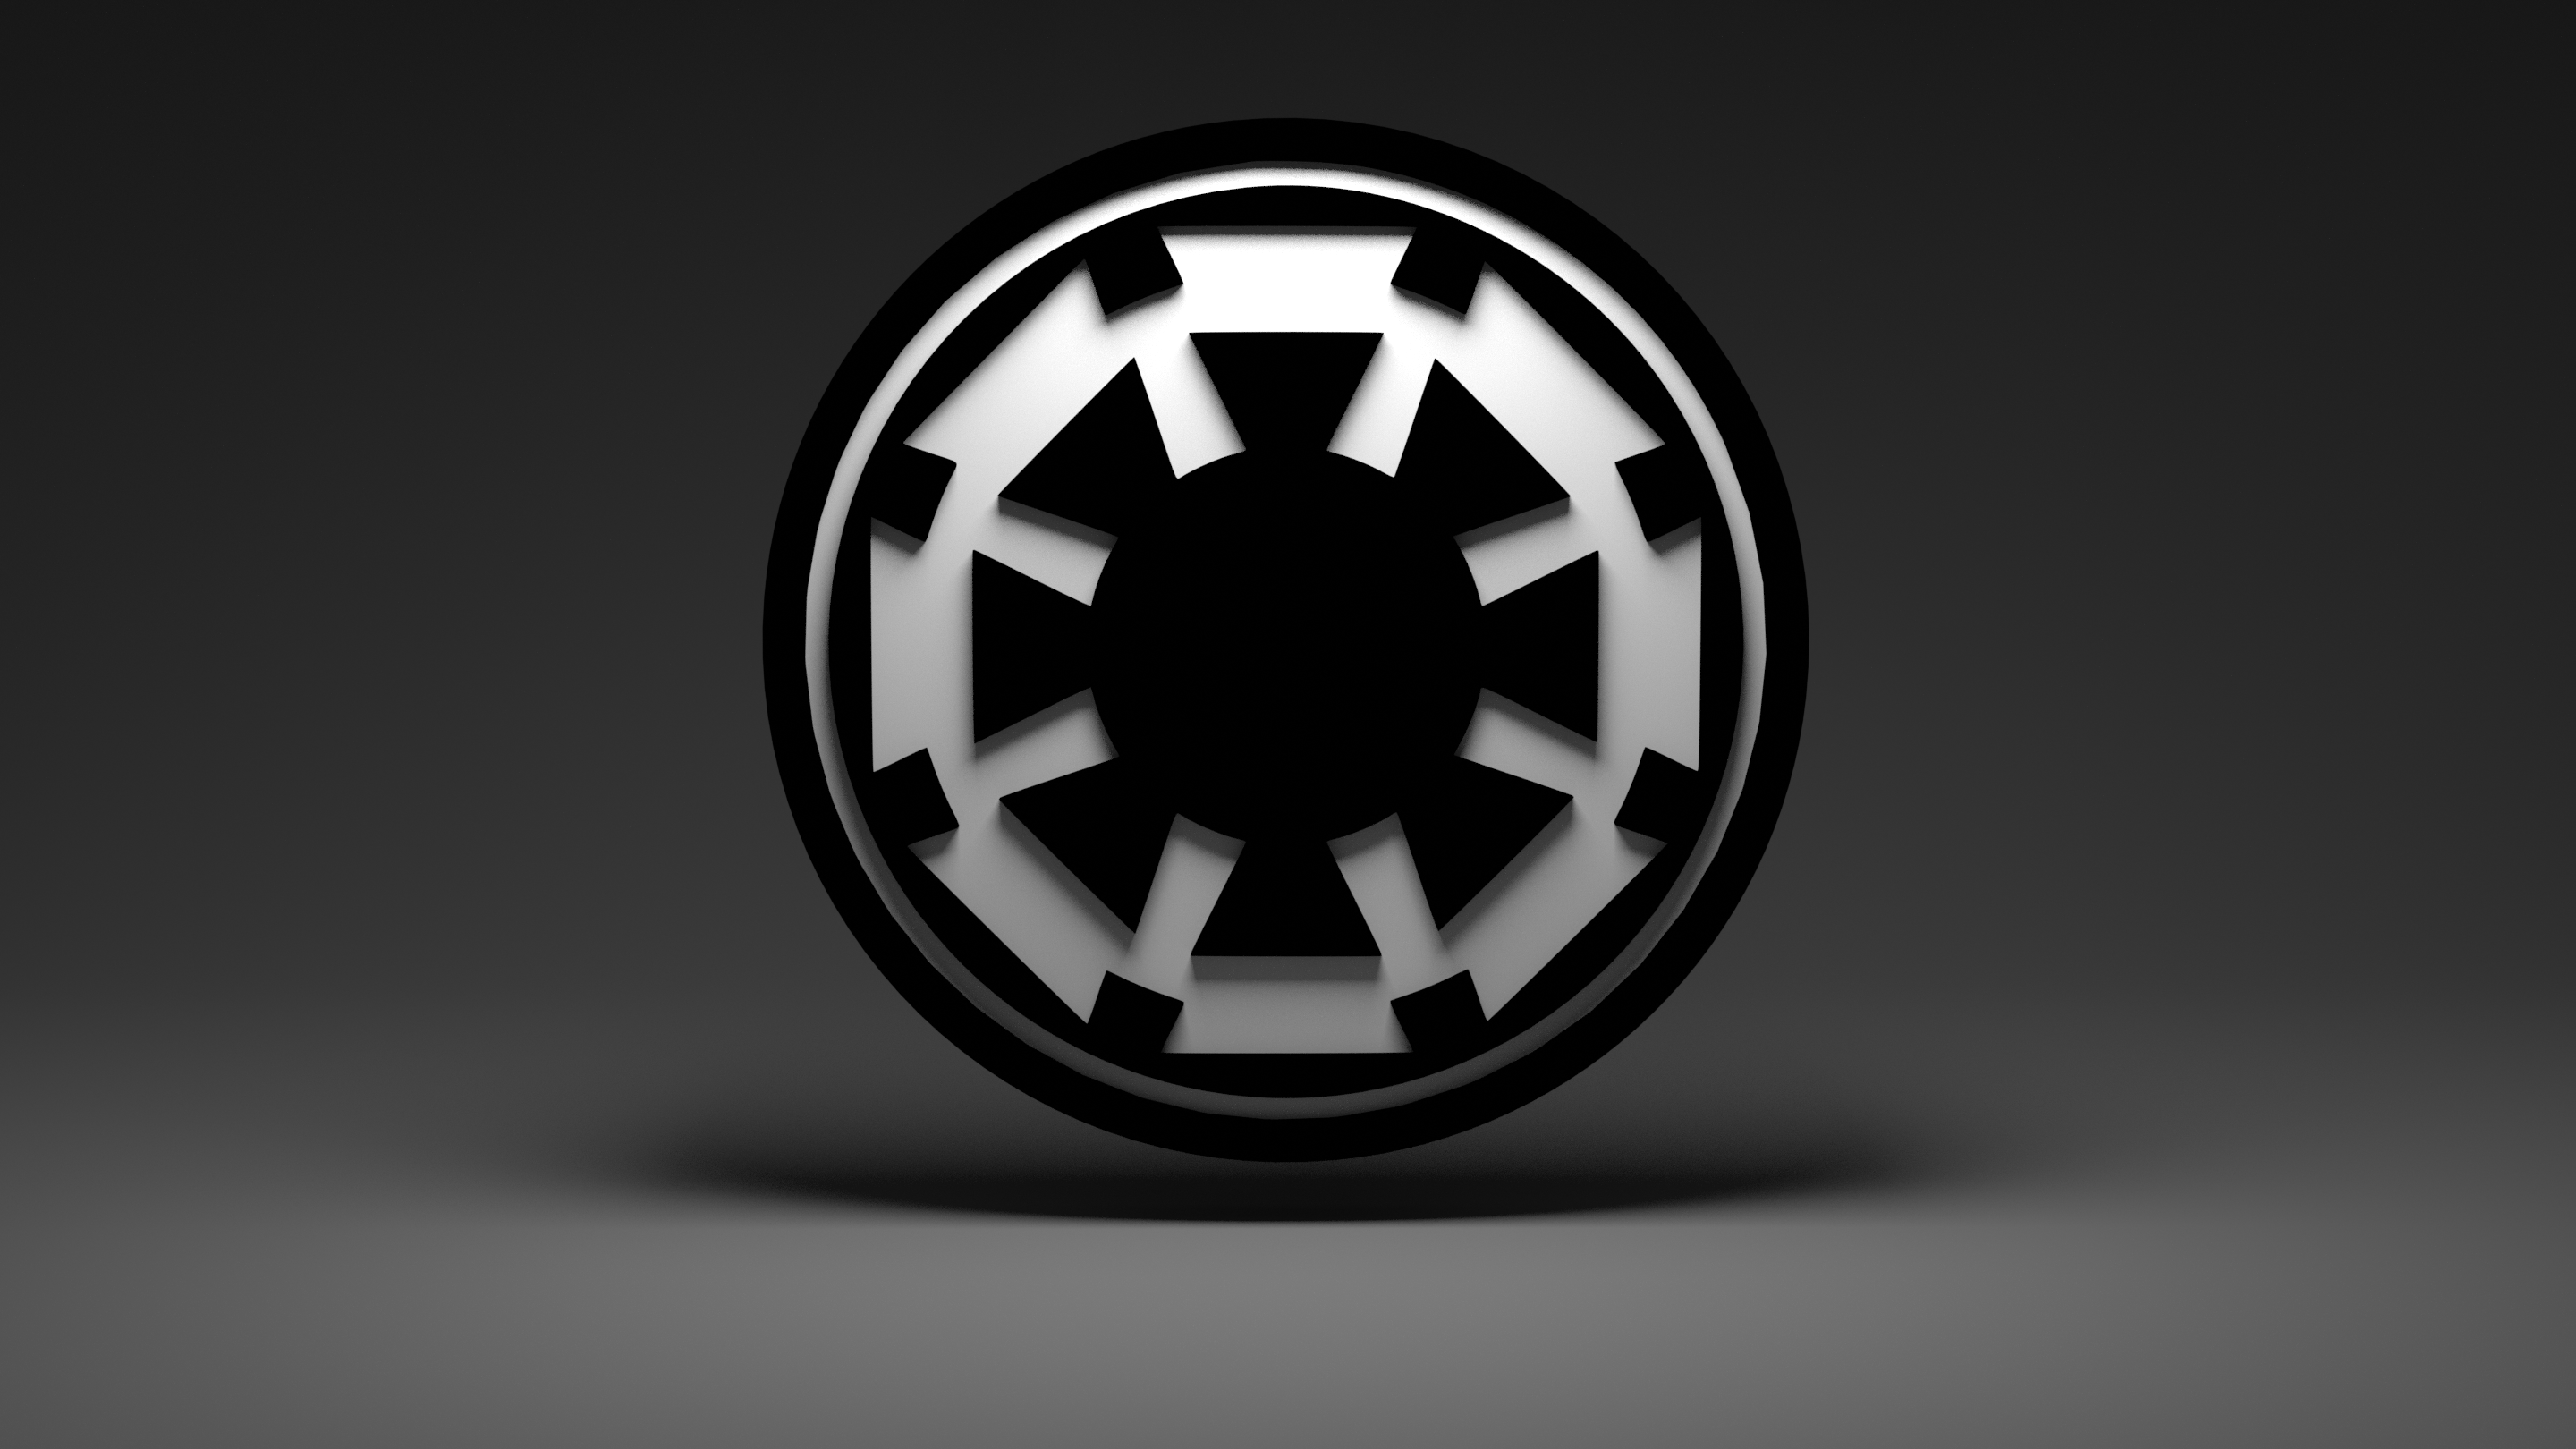 Tweet Topic Sta Star Wars Empire Logos - Star Wars Imperial Logo Png - Free  Transparent PNG Download - PNGkey